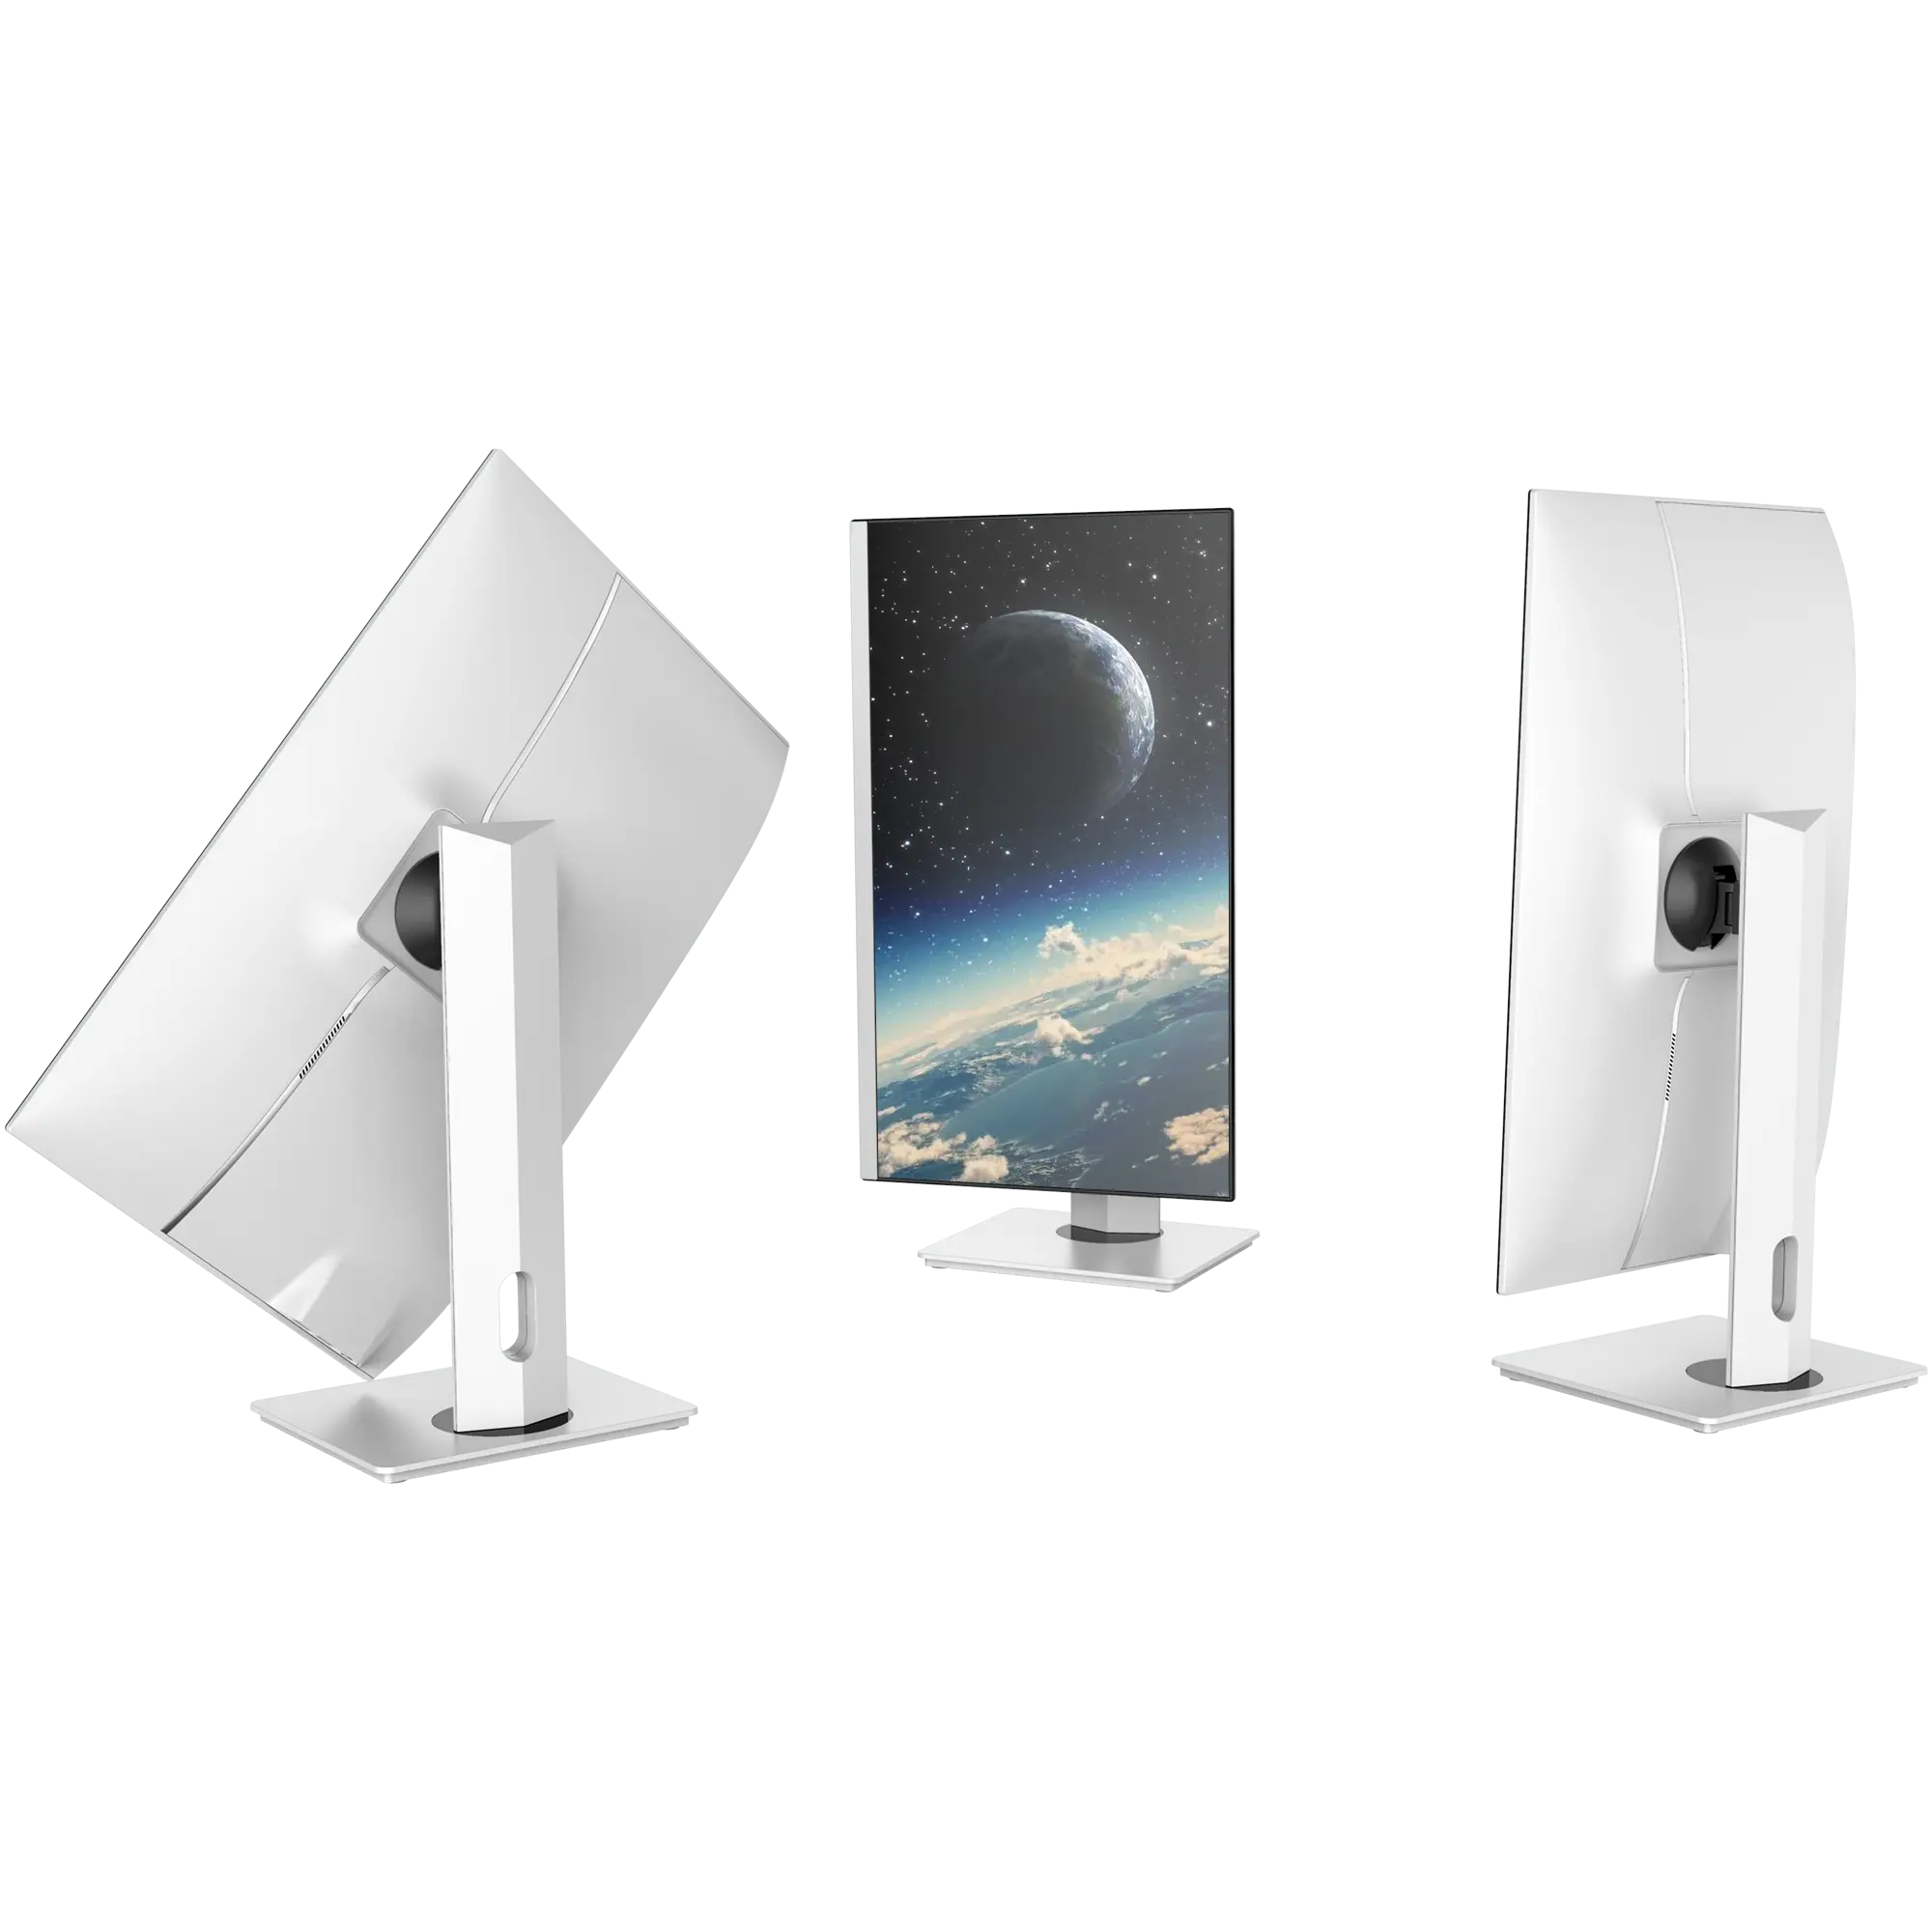 Lifting Base White 16.7m Colors Machine Desktops All-In-Ones Desktop Computer